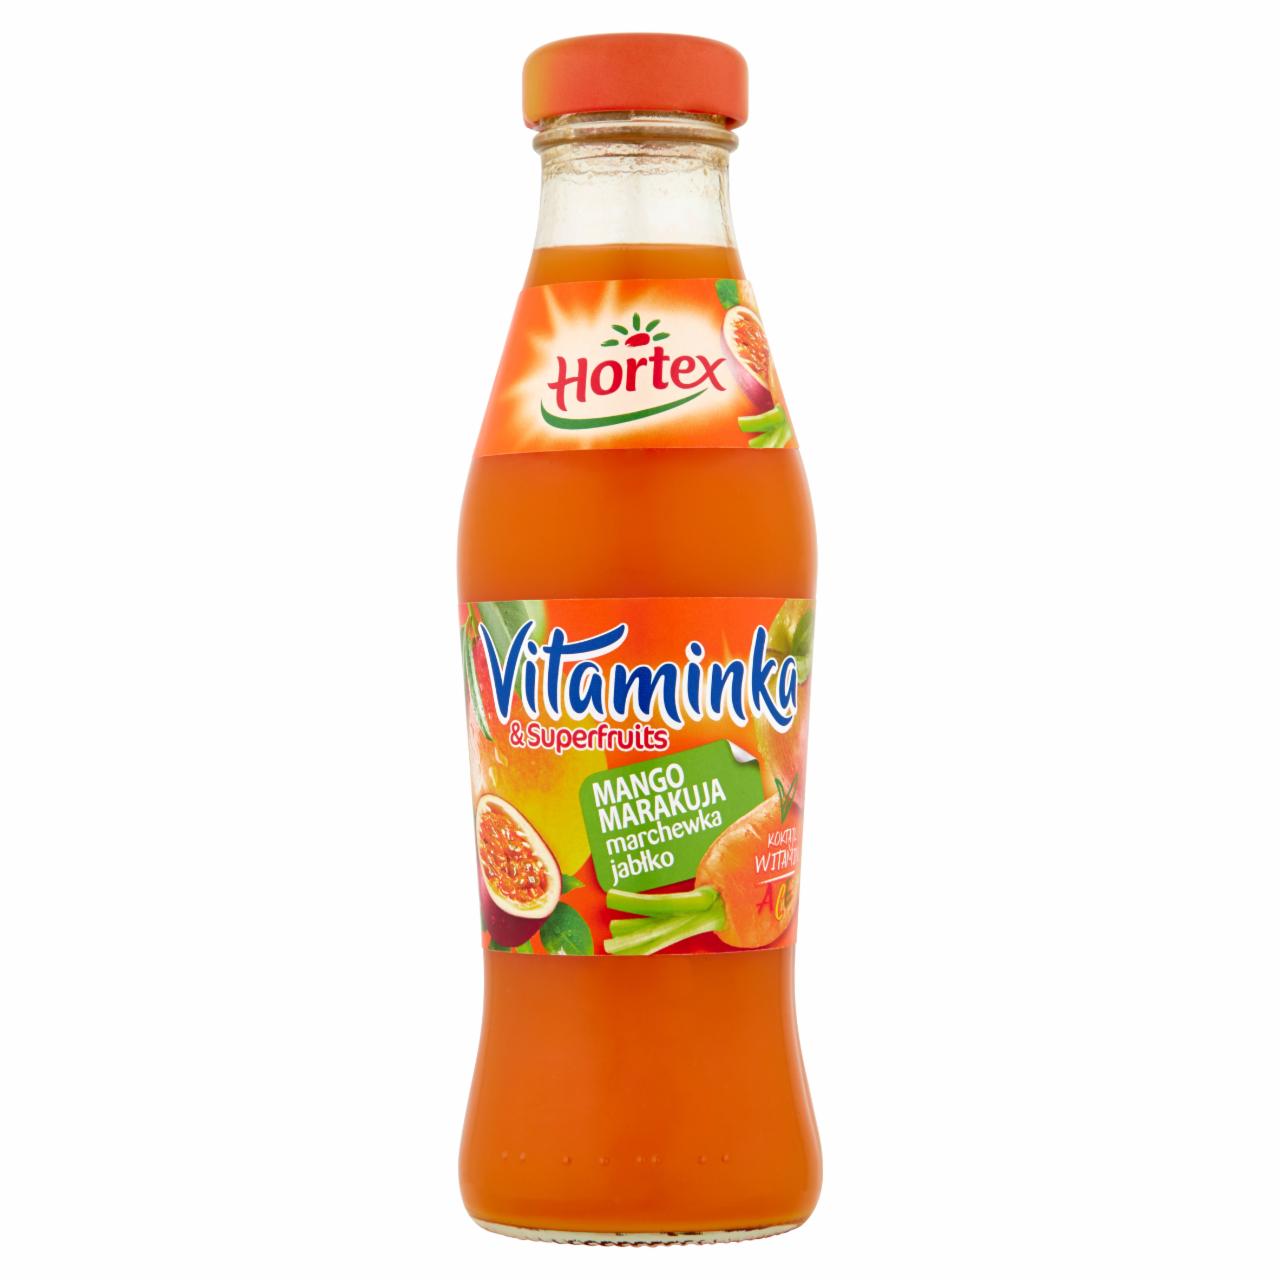 Zdjęcia - Hortex Vitaminka & Superfruits Mango marakuja marchewka jabłko Sok 250 ml